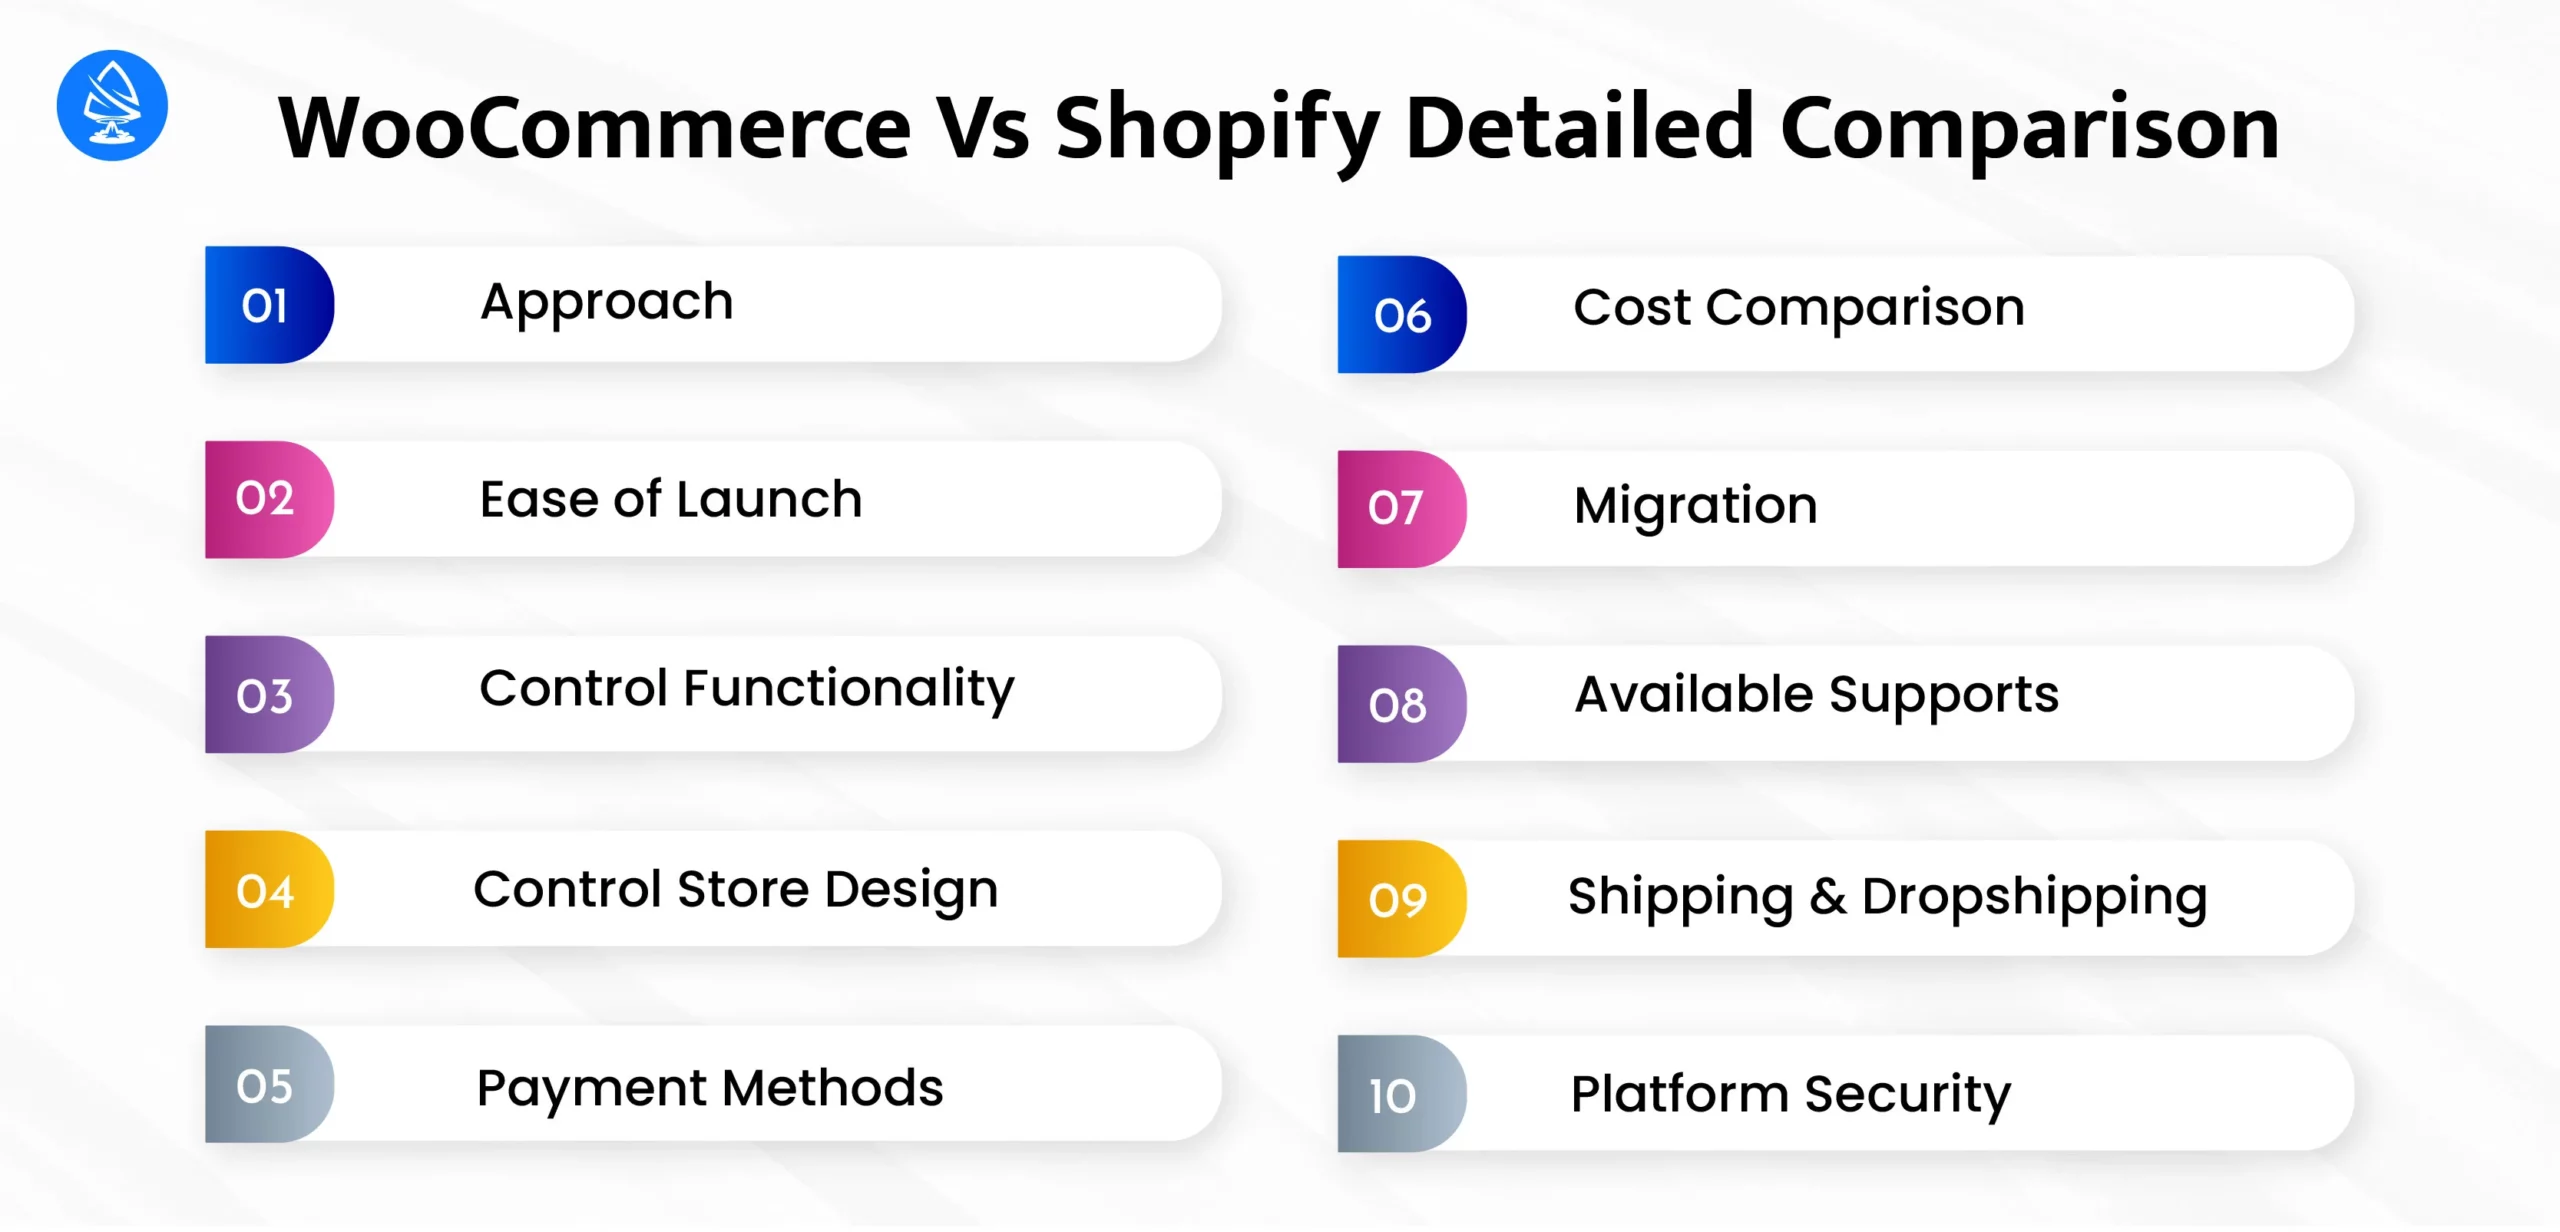 WooCommerce vs Shopify: Detailed Comparison